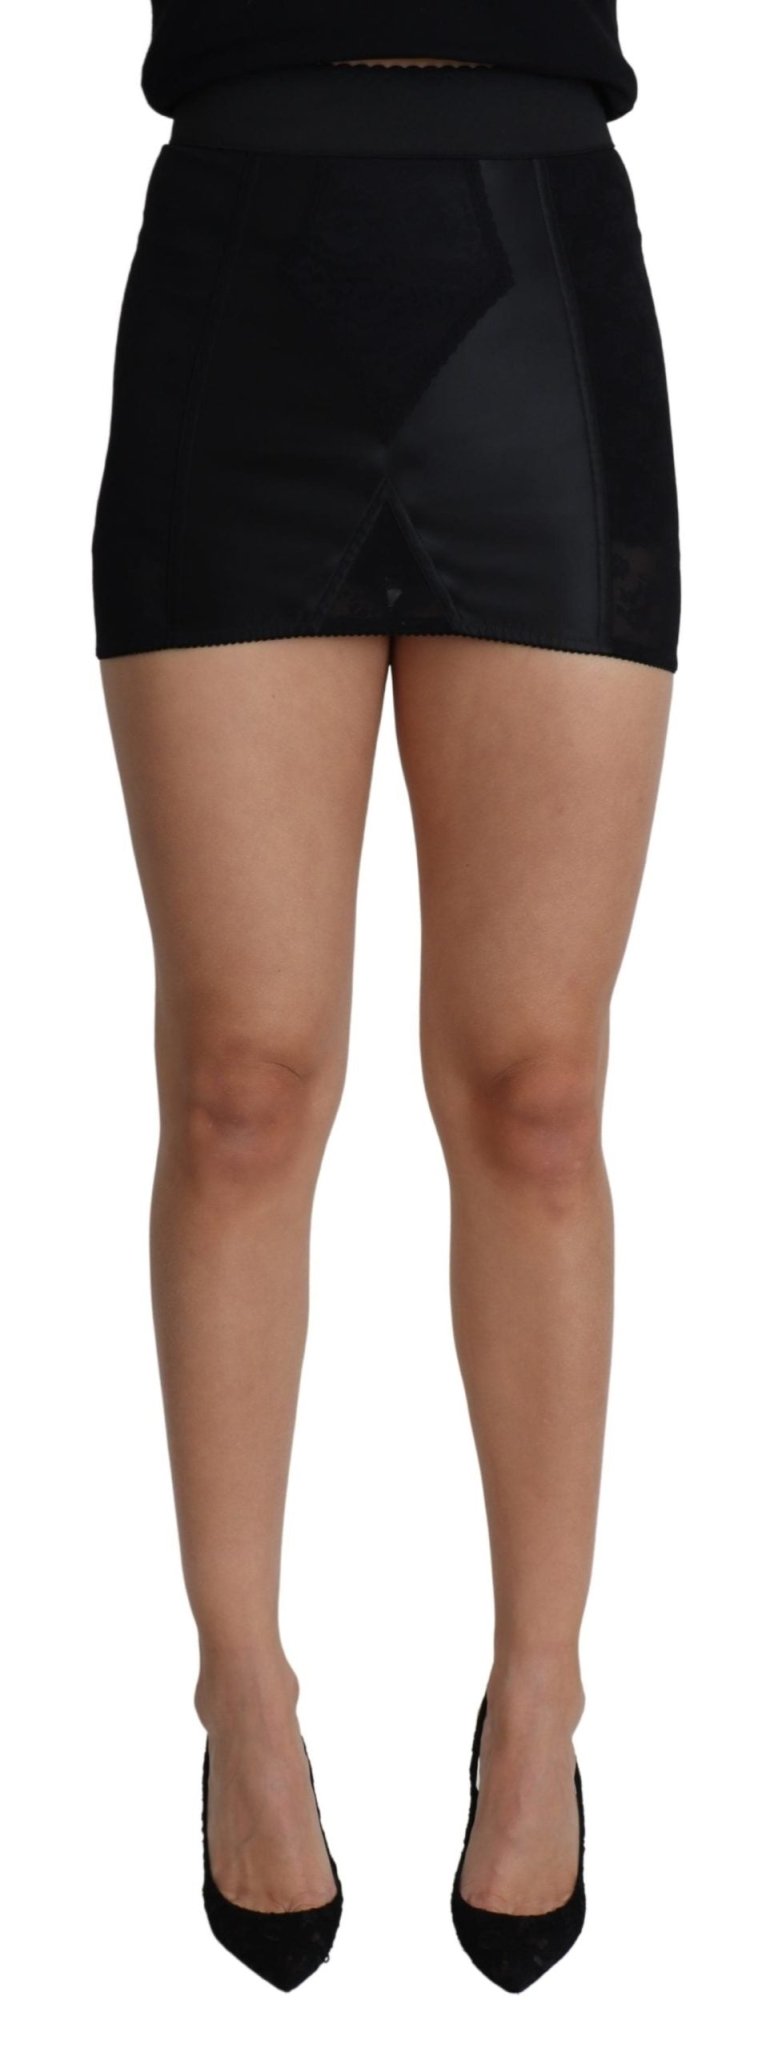 Black Mini Short Lace Stretch Skirt - Avaz Shop